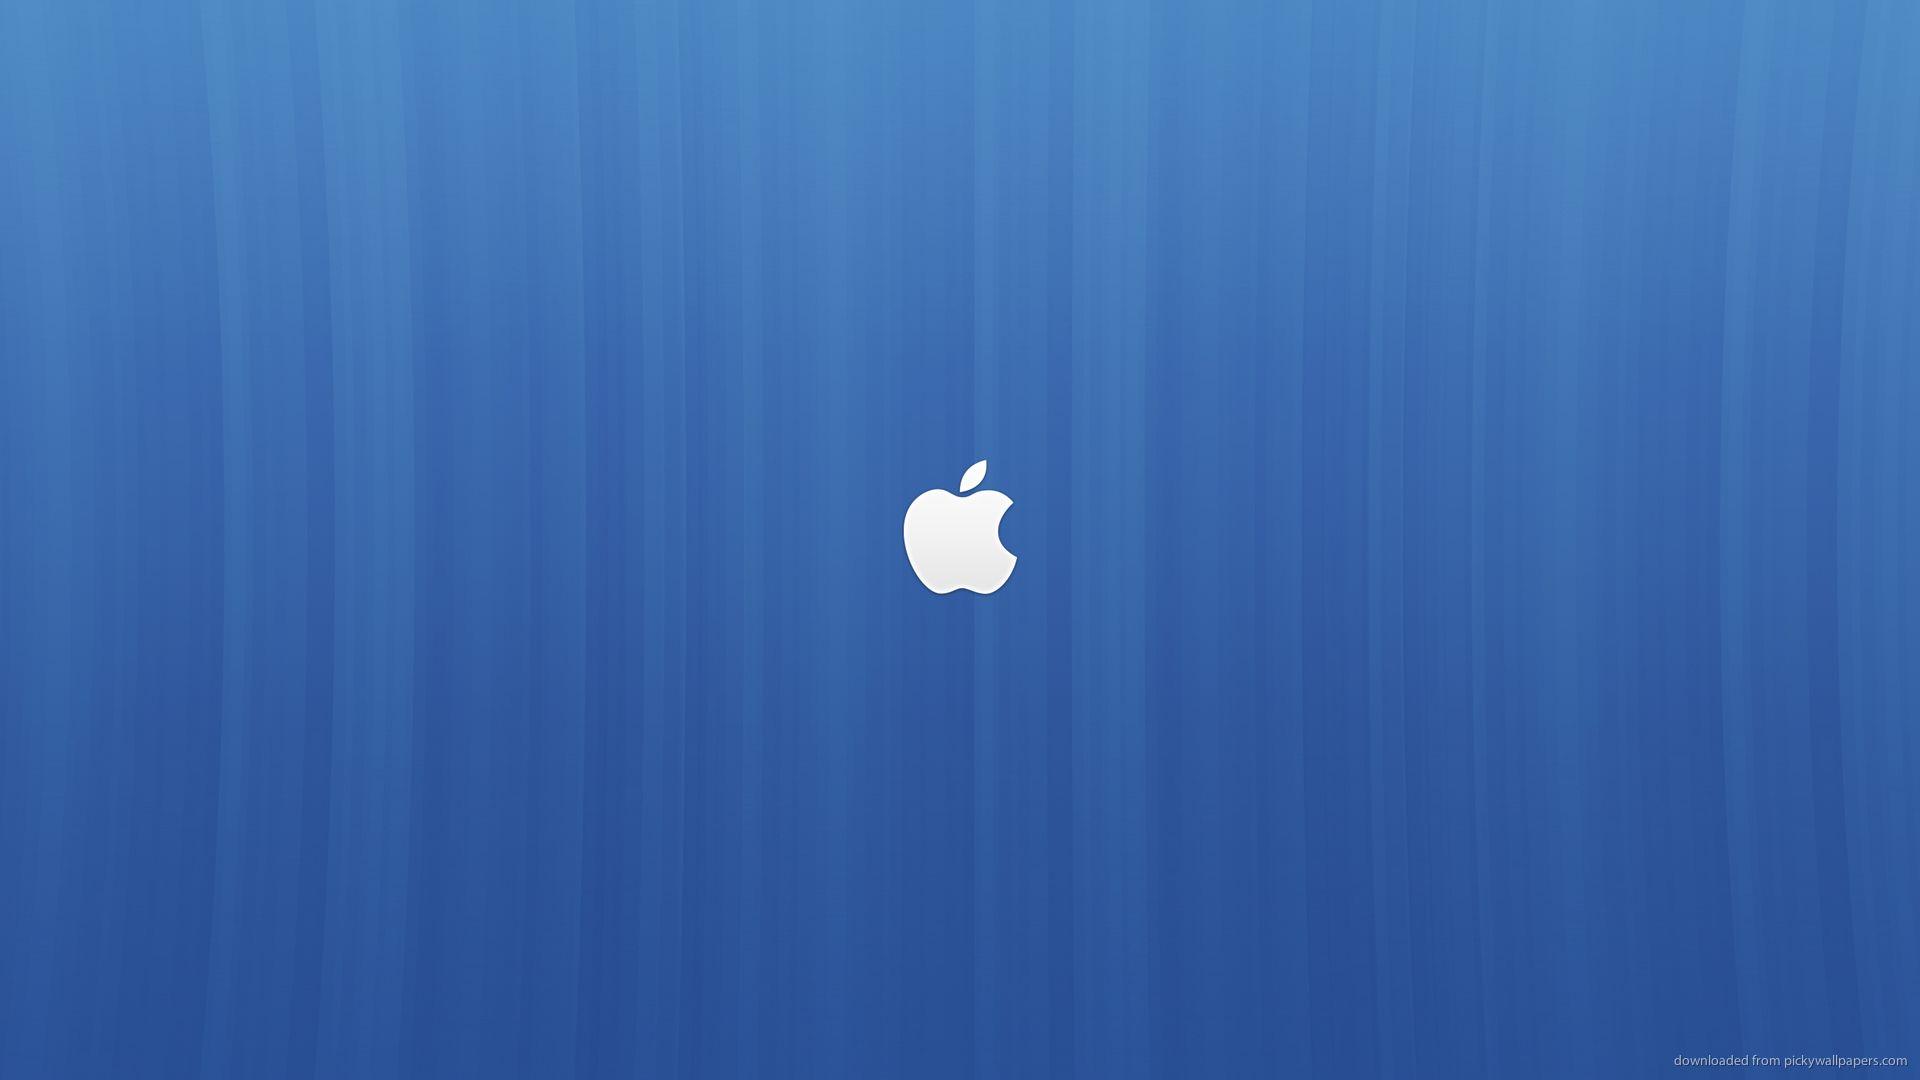 Apple Logo on a Blue Background Wallpaper